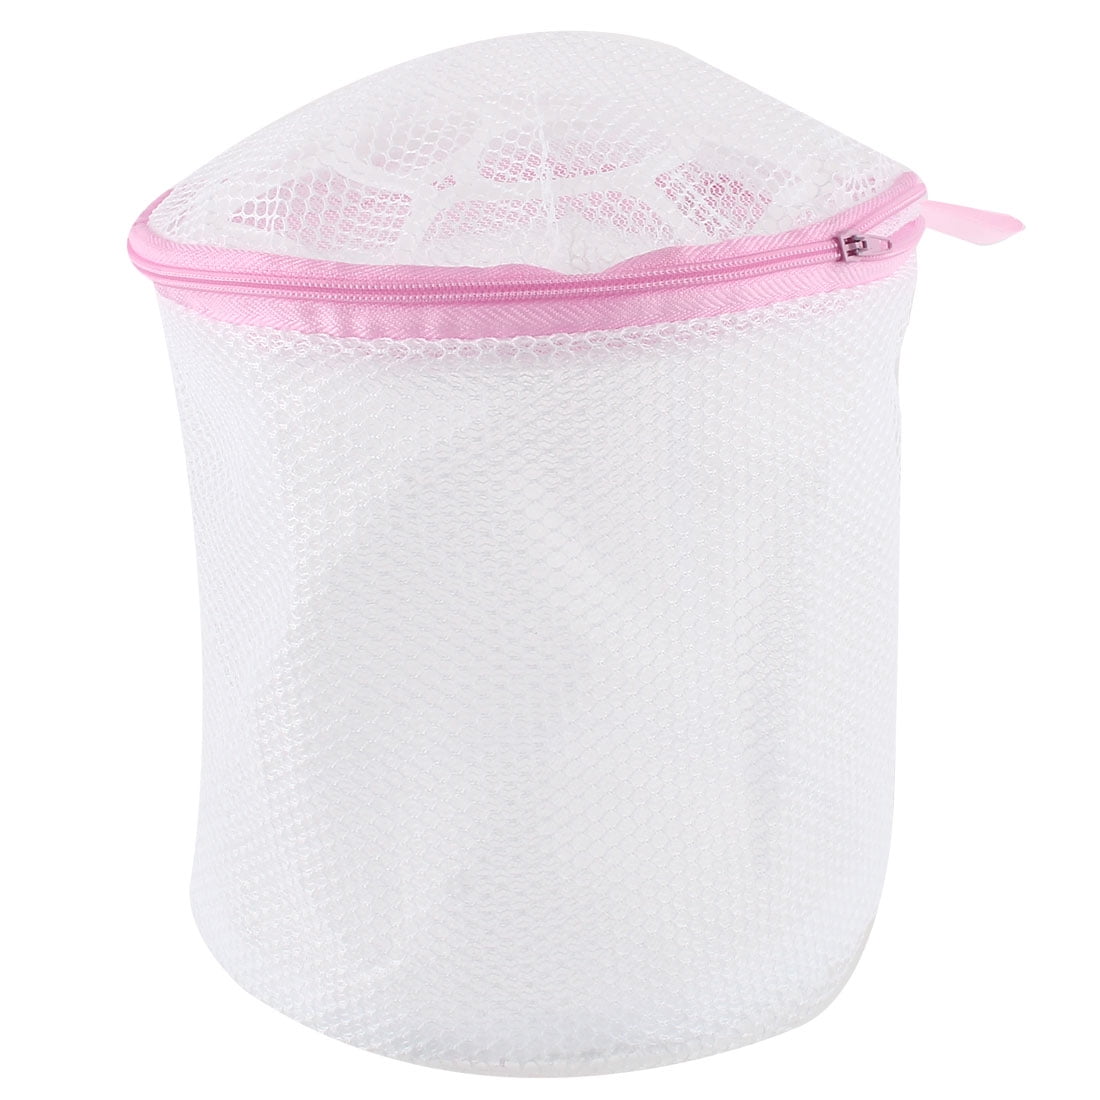 Utility Underwear Aid Bra Laundry Mesh Wash Basket Net Washing Zipper Bag x 